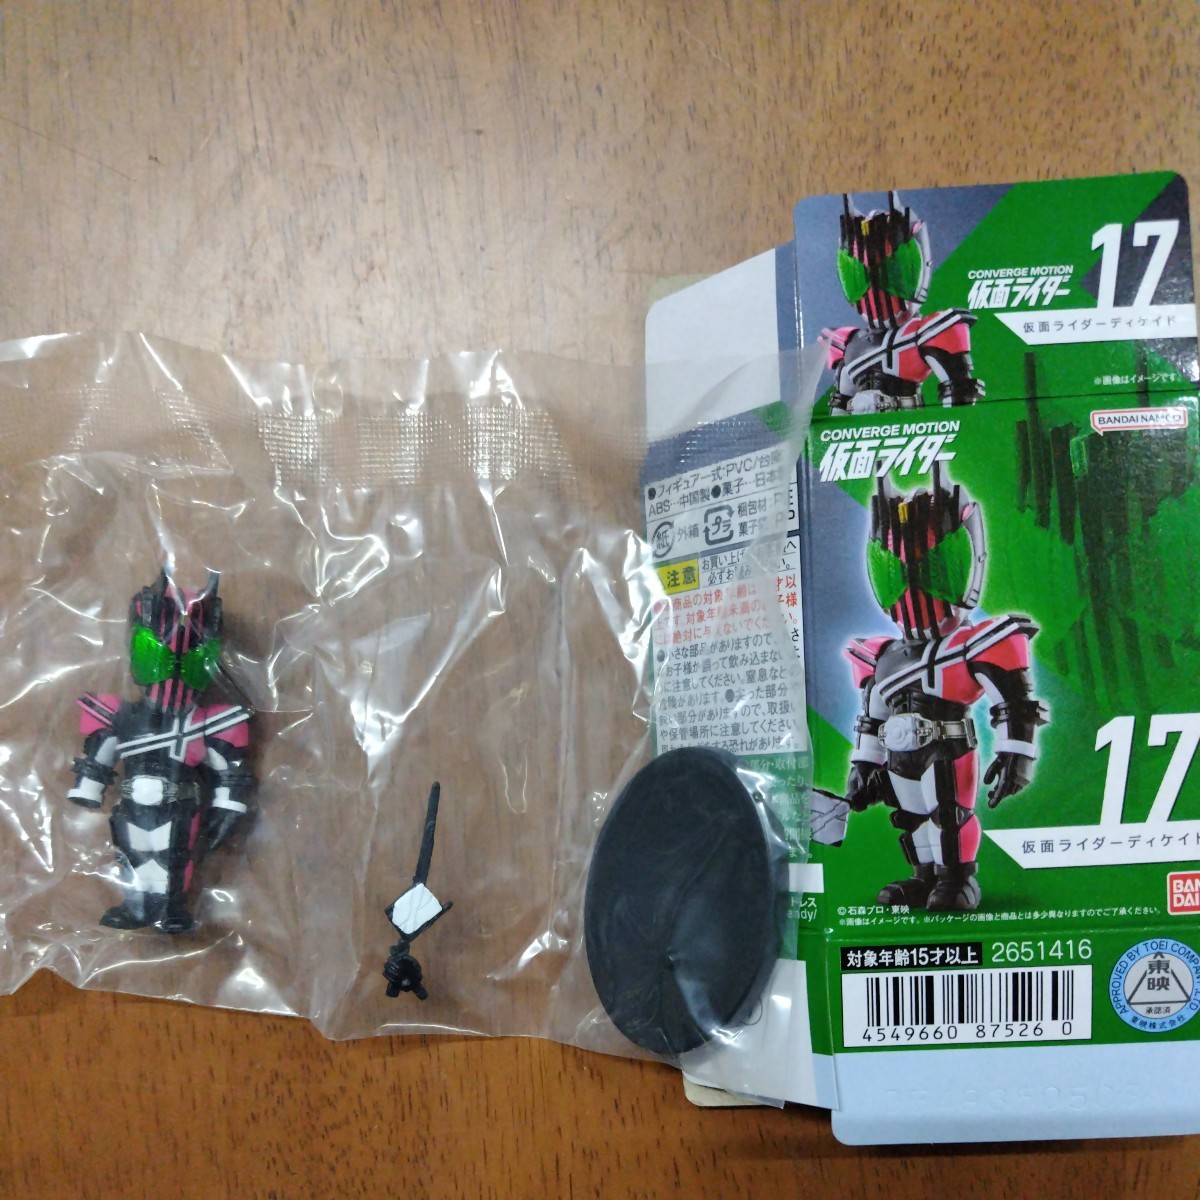 converge motion Kamen Rider 3 Kamen Rider 17 Kamen Rider ti Kei do